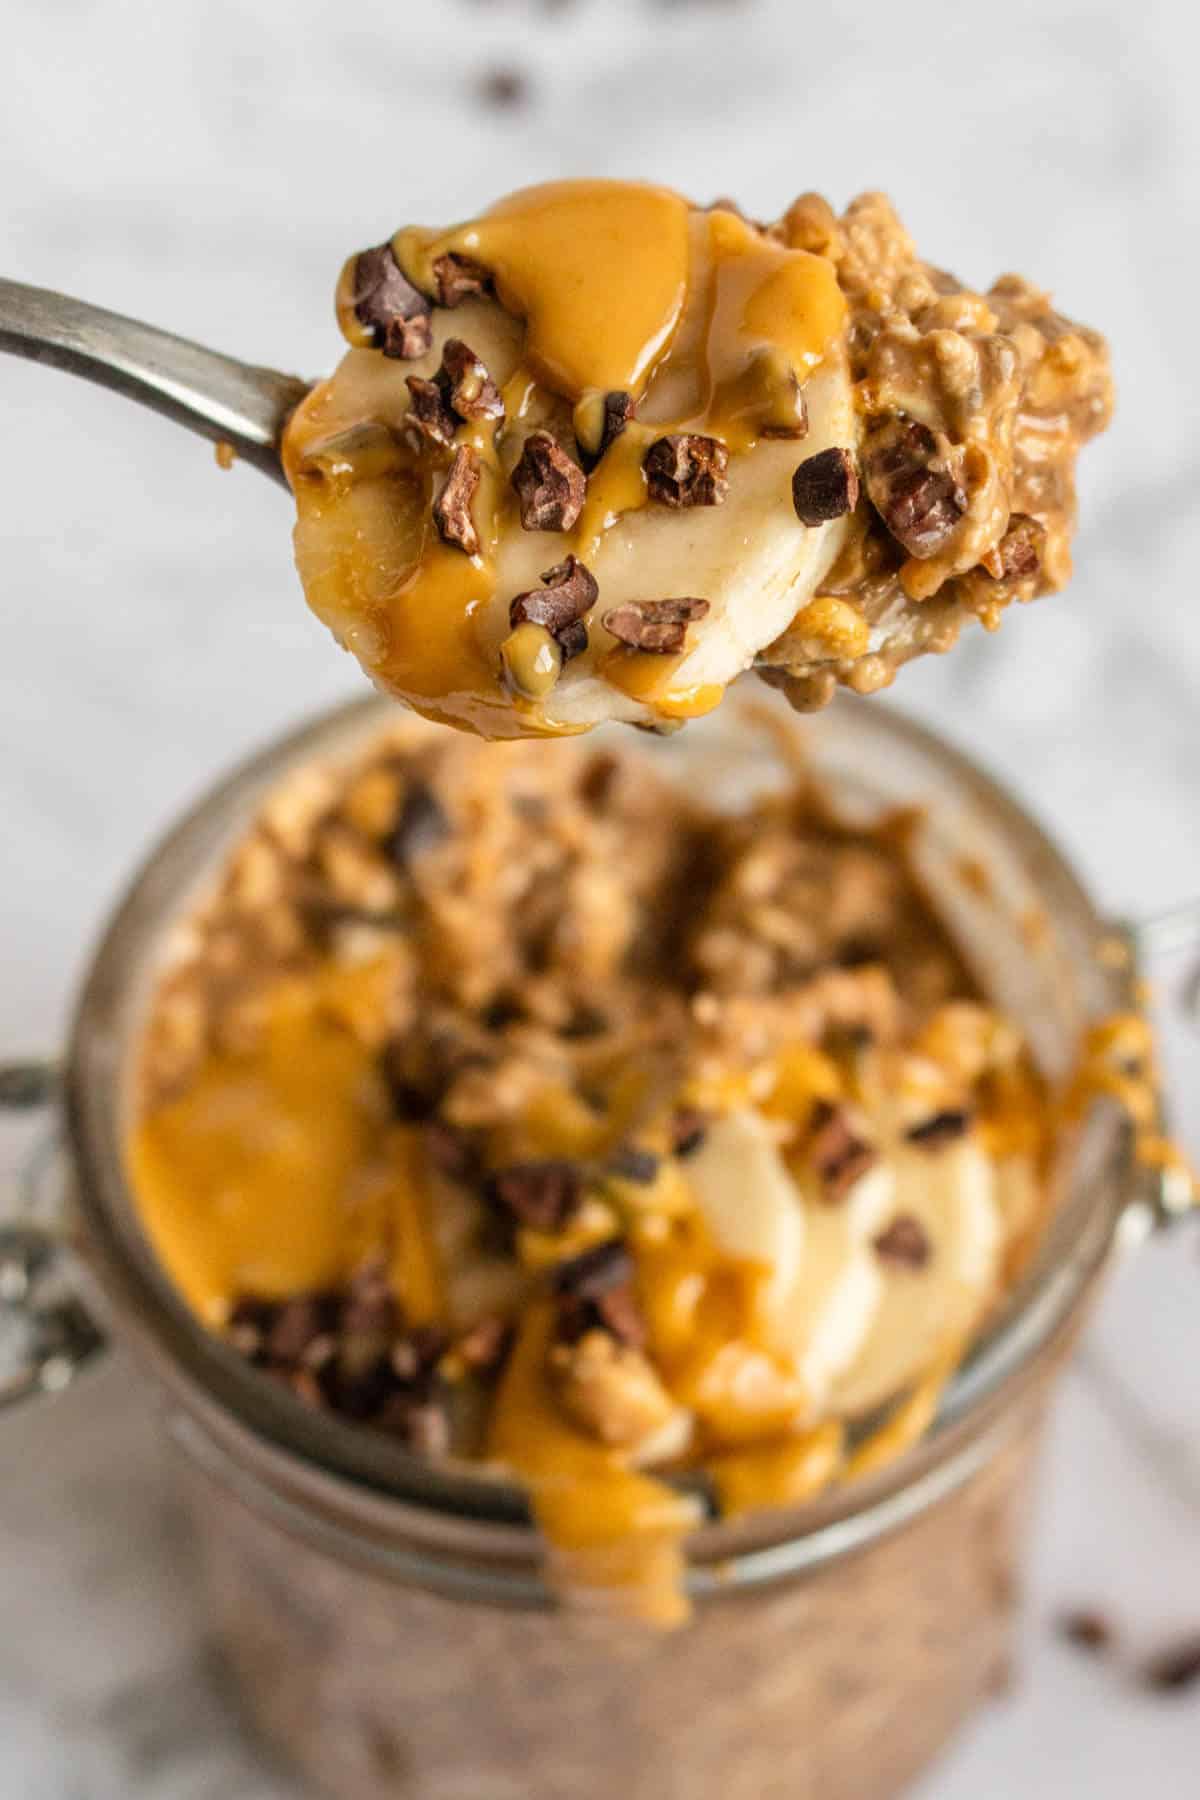 https://cookingwithayeh.com/wp-content/uploads/2021/01/Chocolate-Peanut-Butter-Overnight-Oats-4.jpg